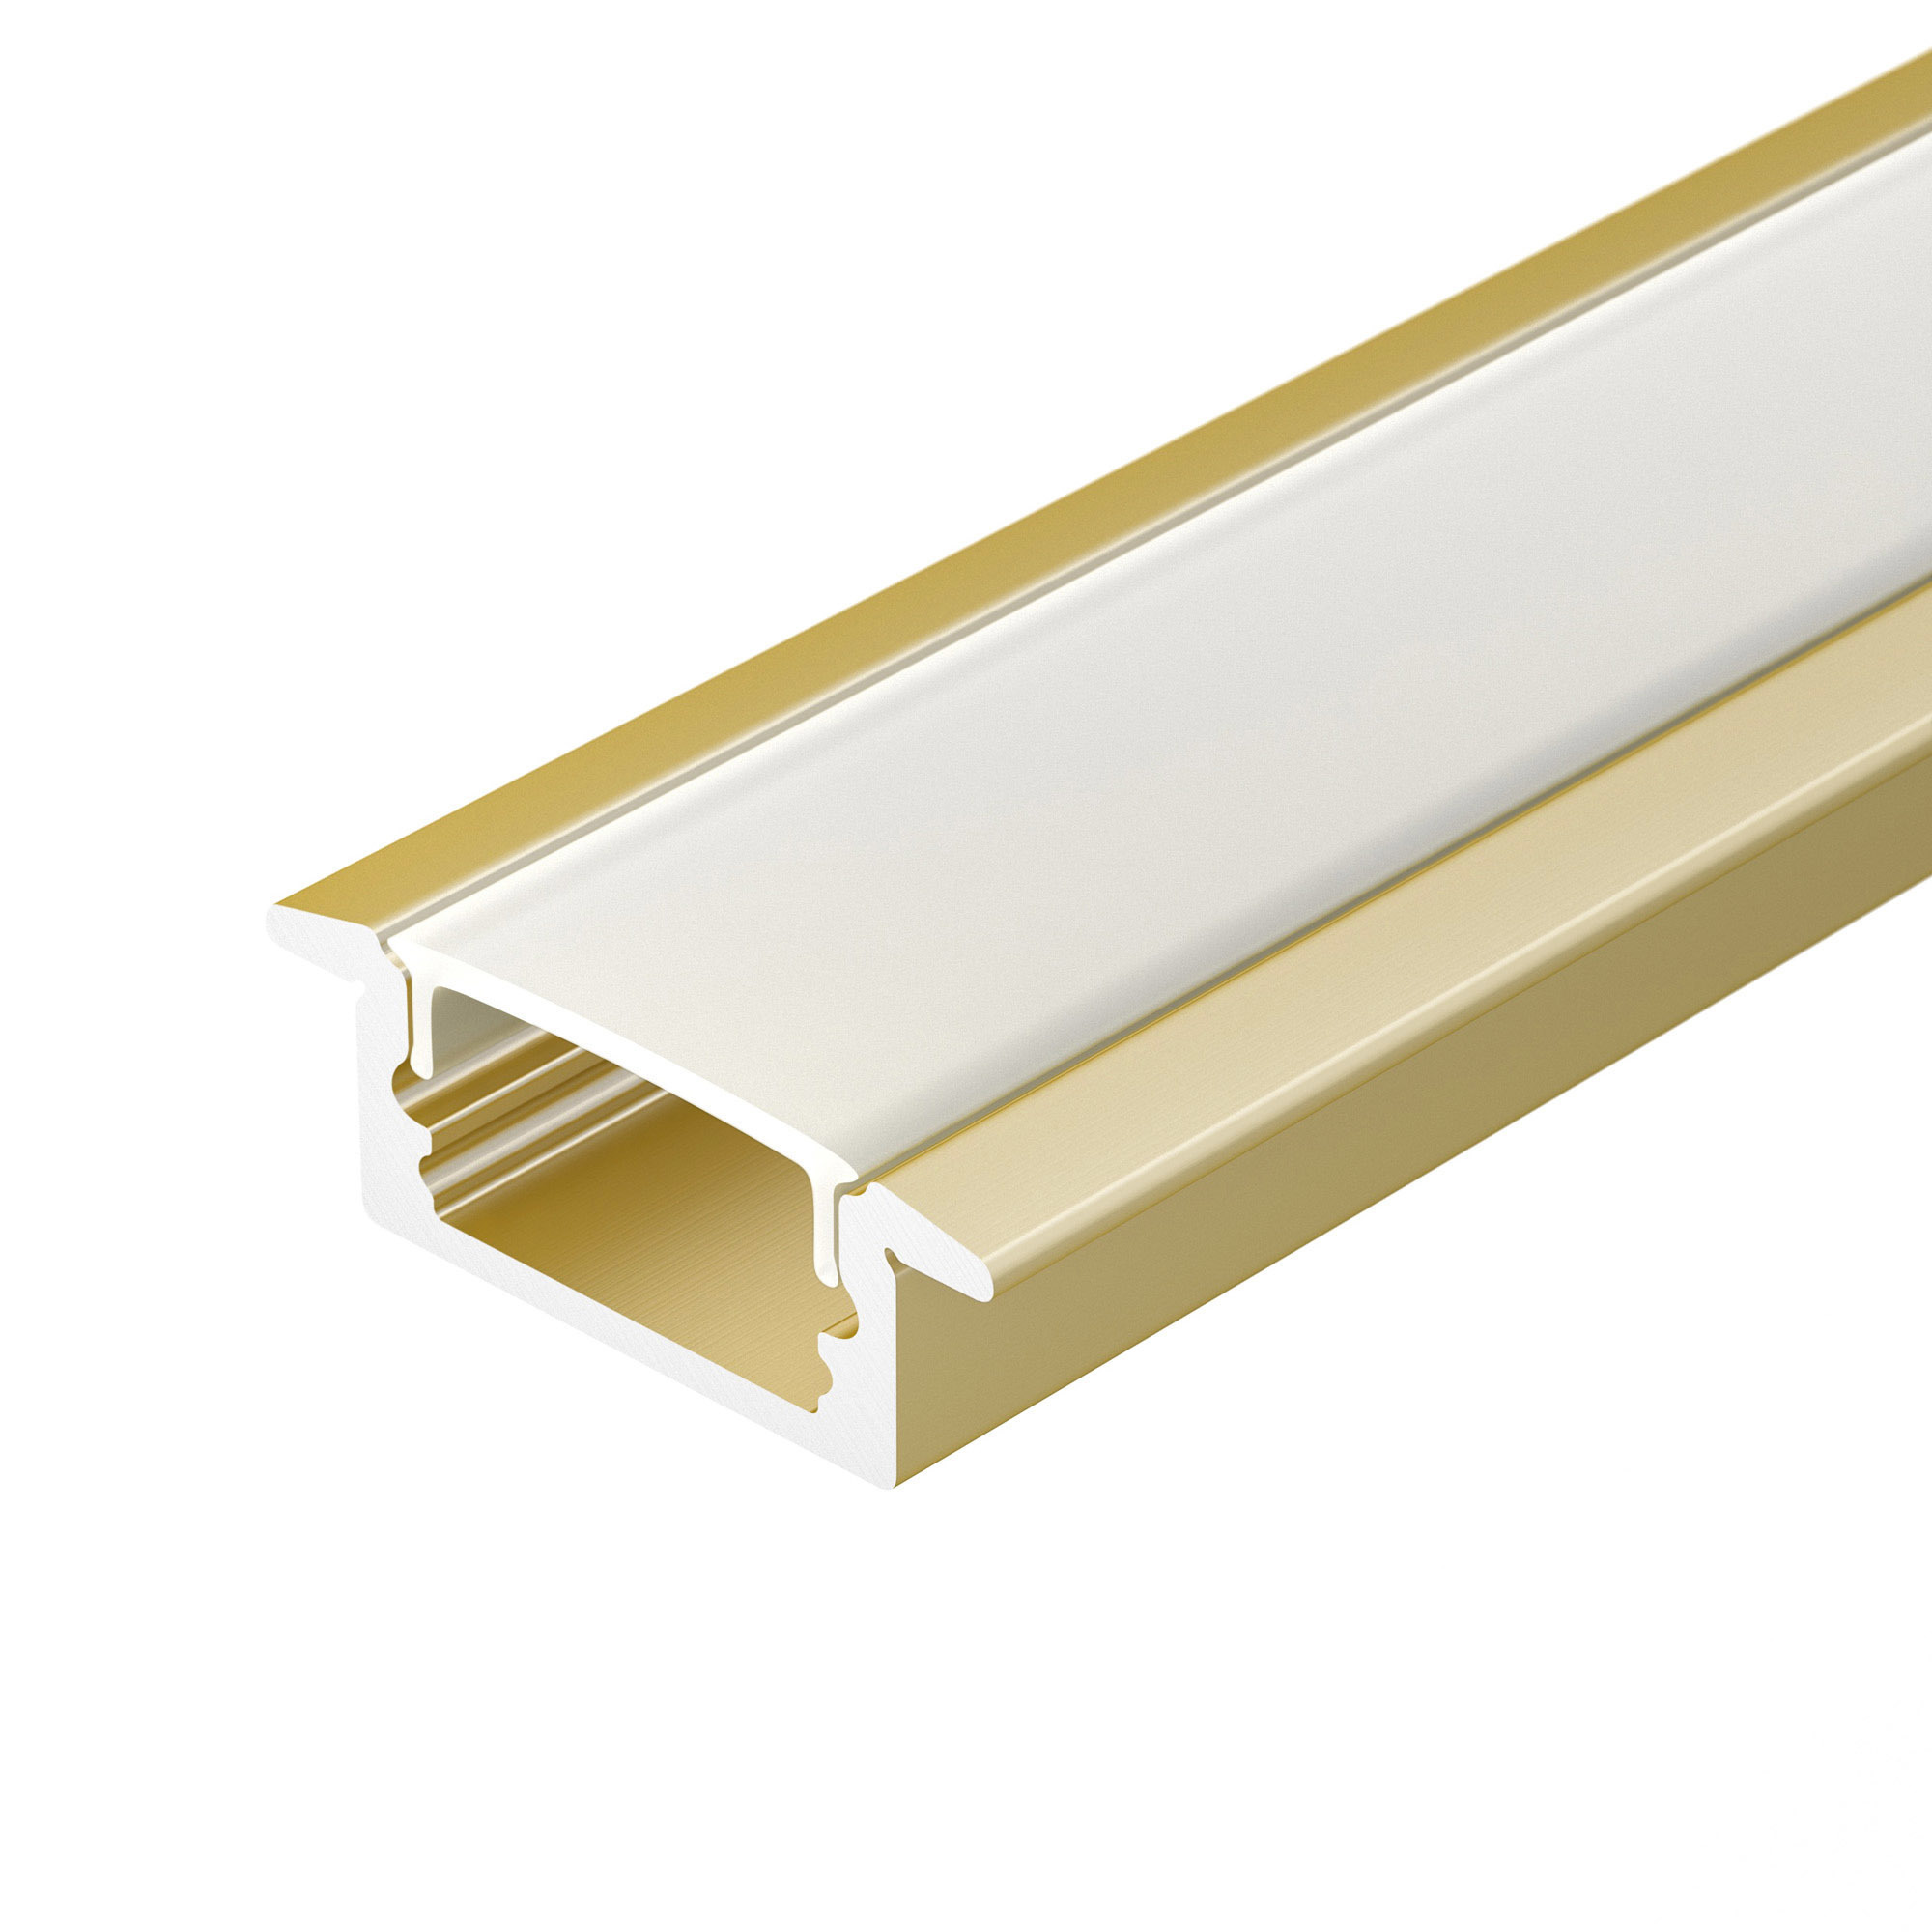 Профиль LINE-2308-F-2000 ANOD GOLD (Arlight, Алюминий) т профиль 15x15x2x1000 мм алюминий золотой